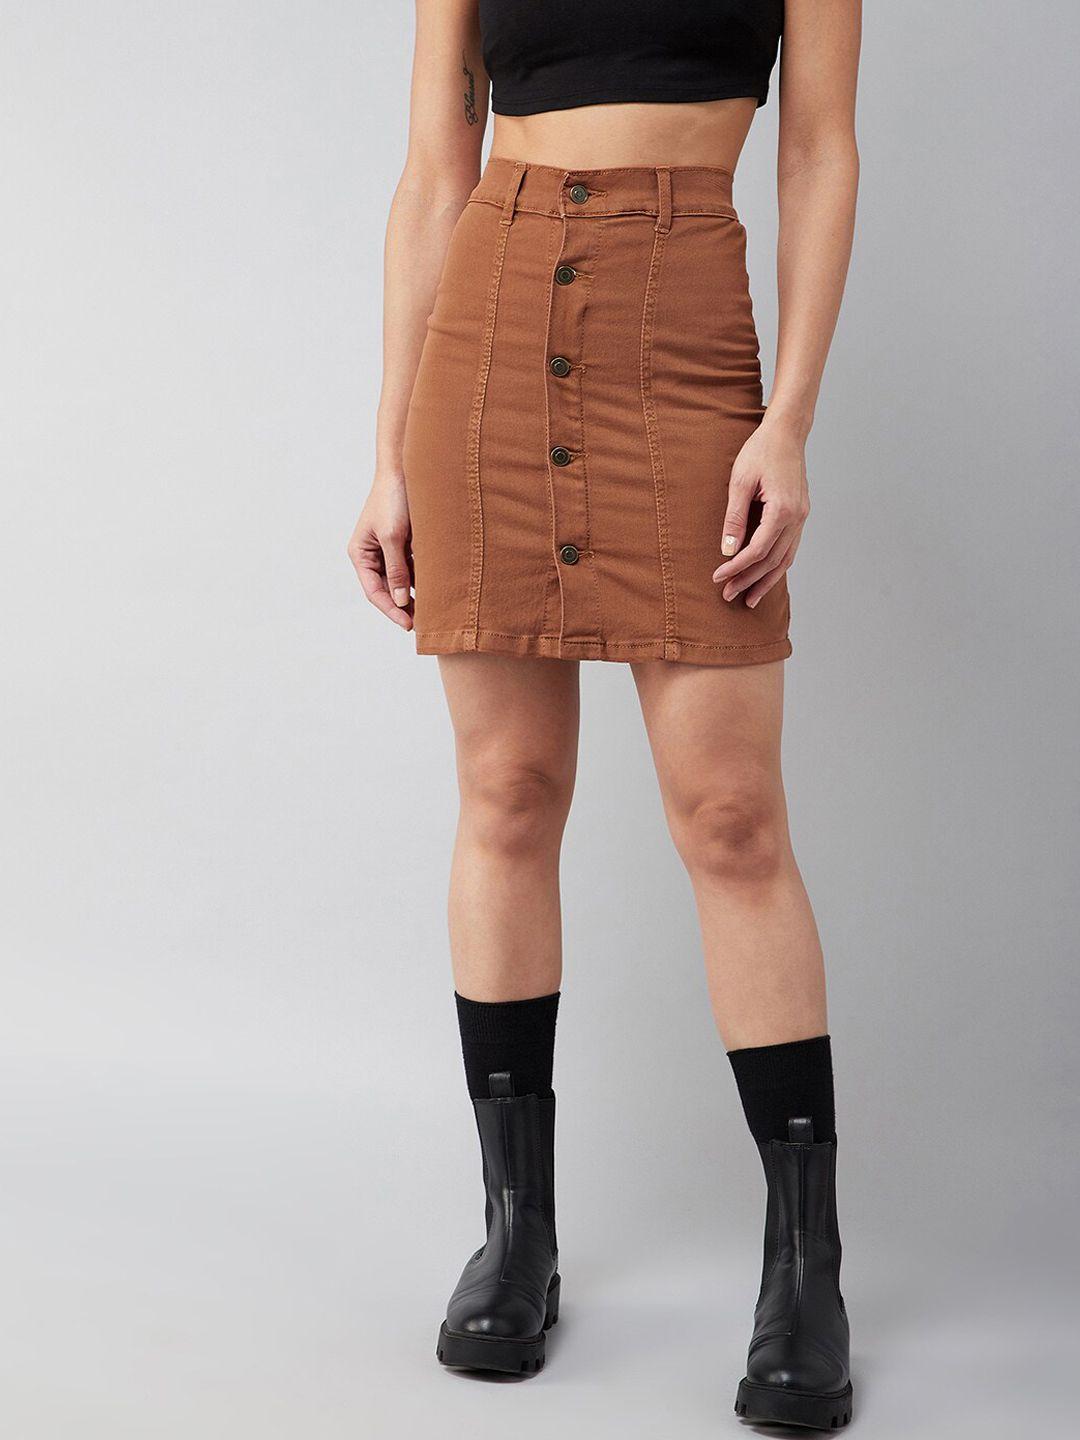 dolce crudo brown denim straight skirt